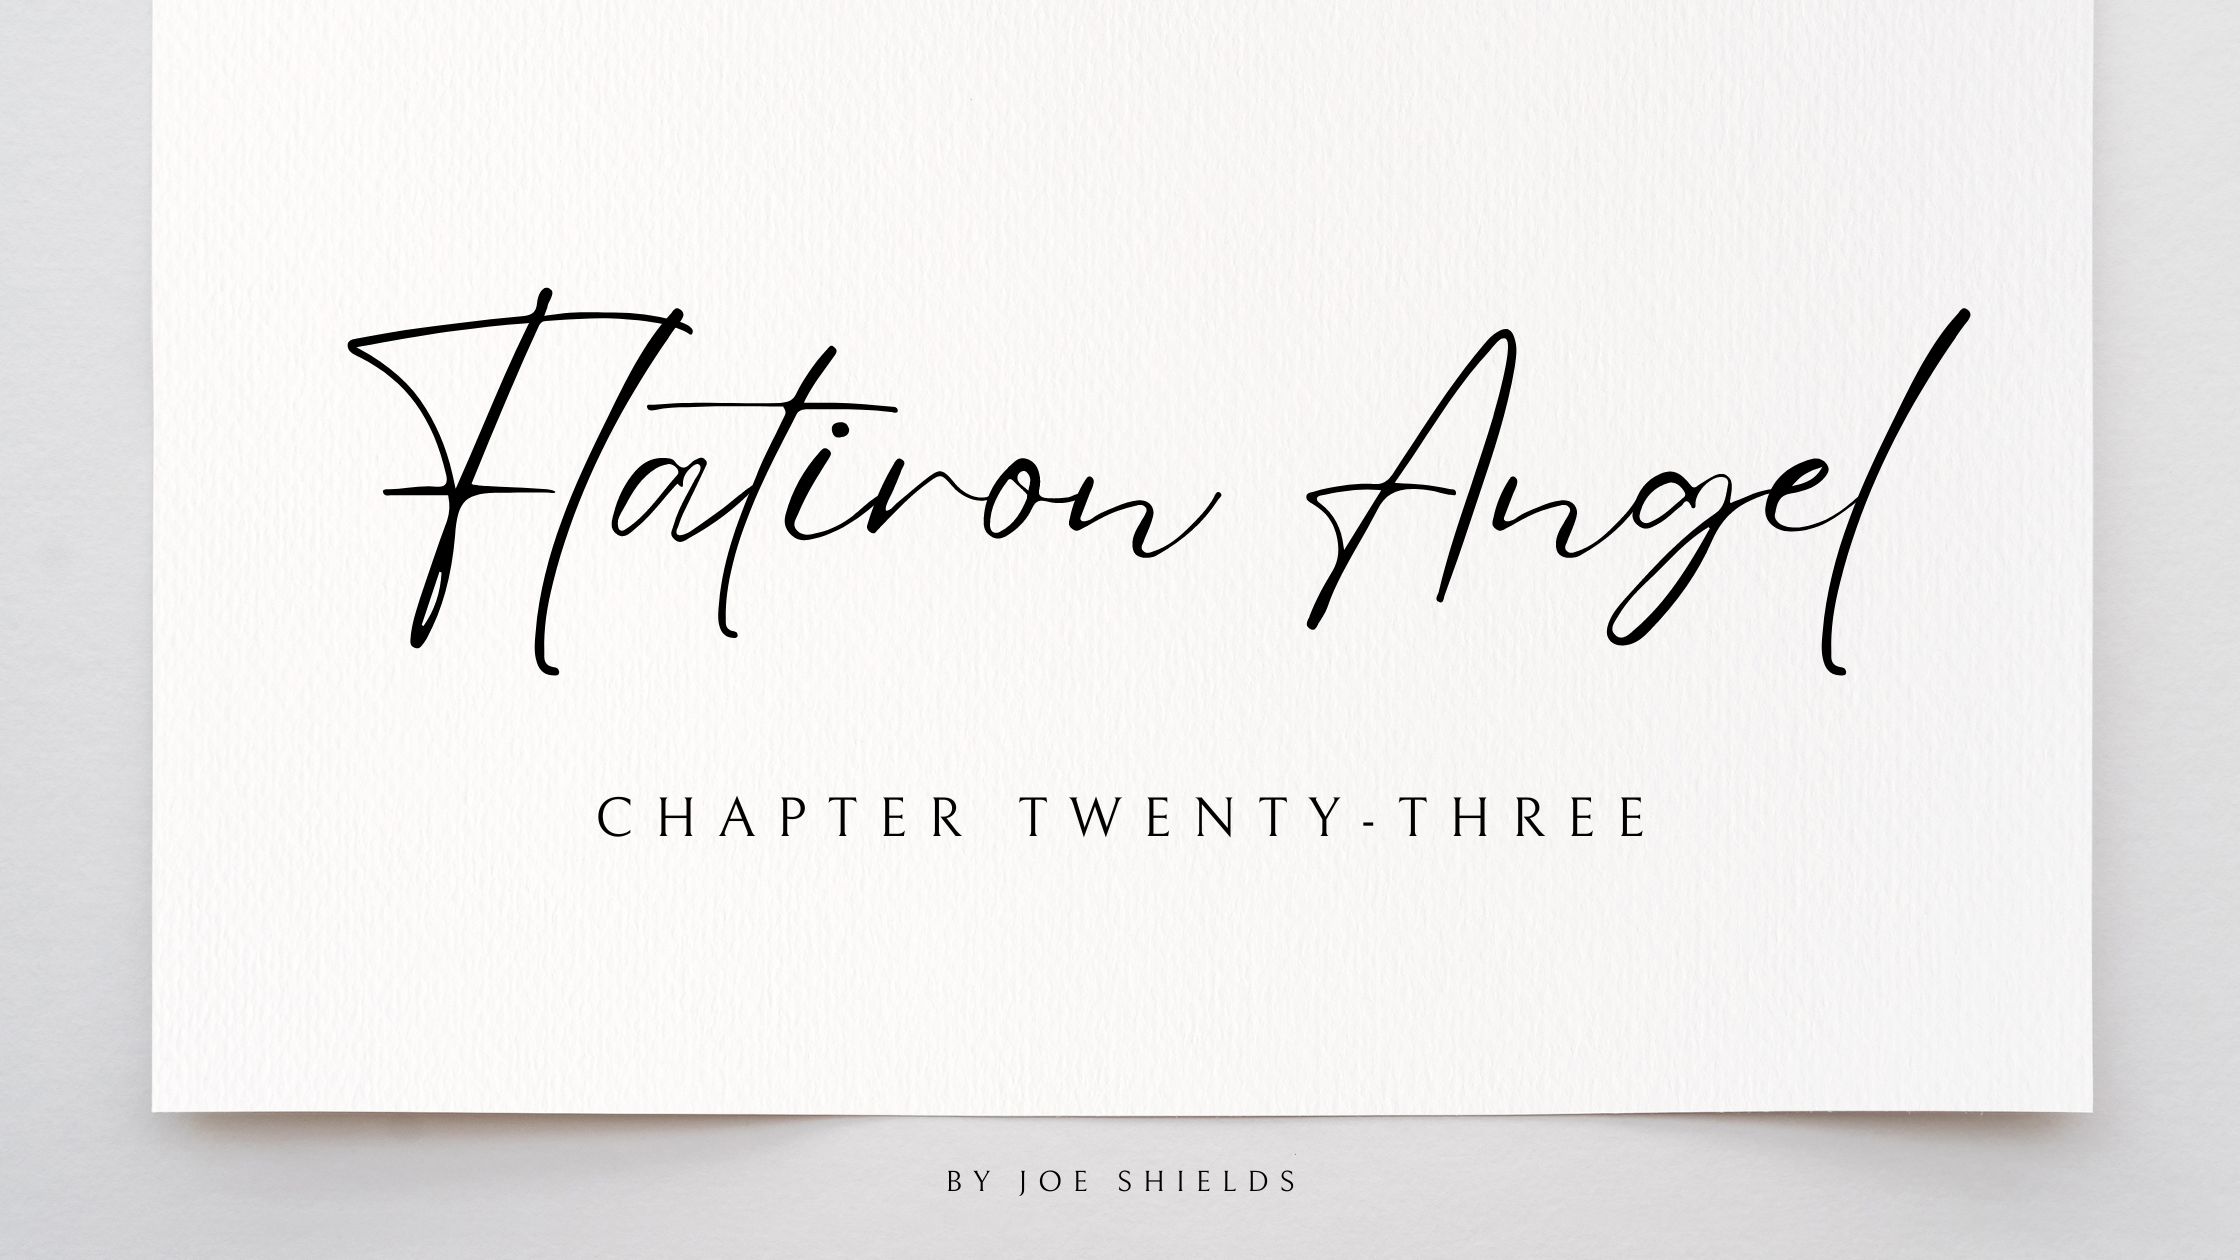 Flatiron-Angel-Chapter-Twenty-Three-By-Joe-Shields